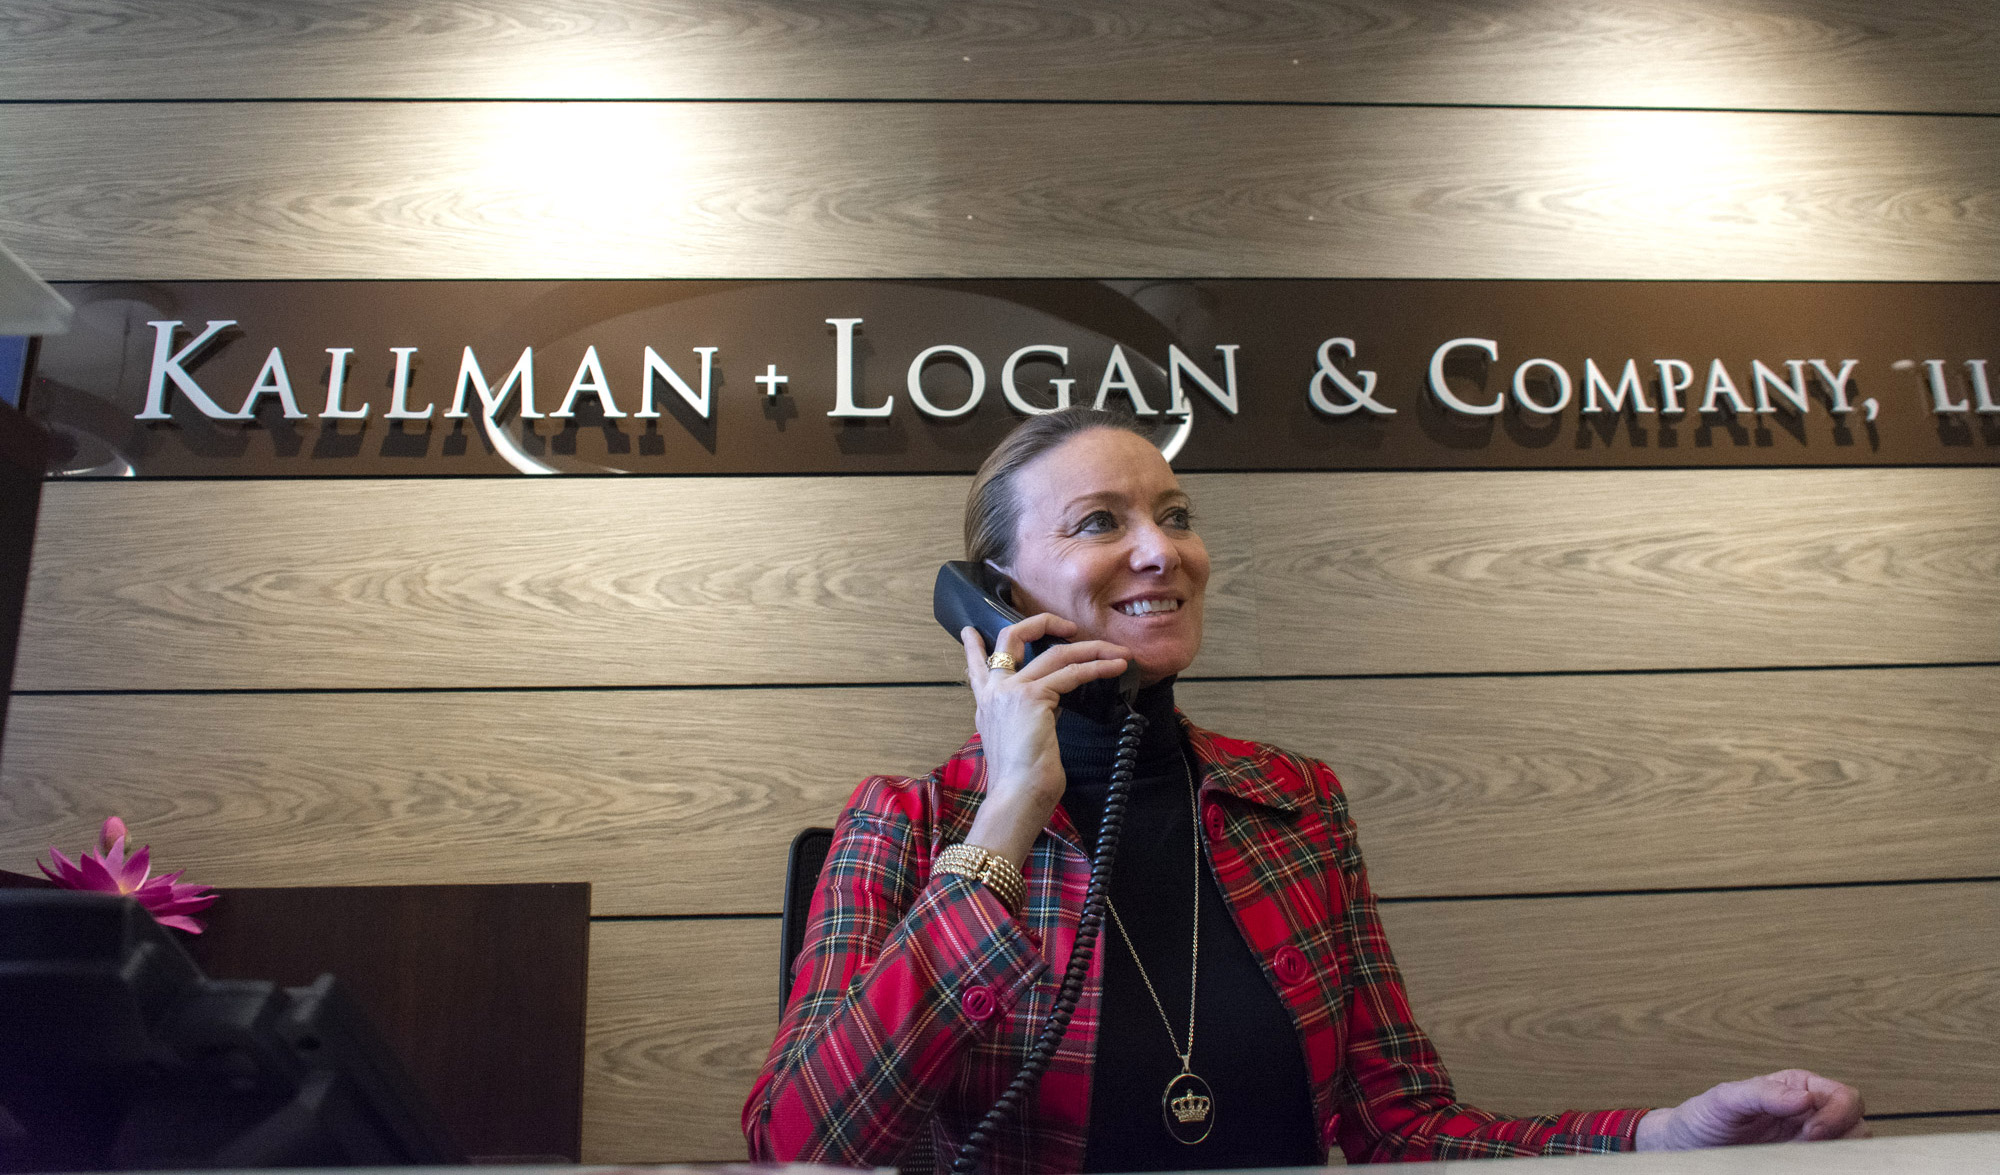 Kallman + Logan & Company, LLP